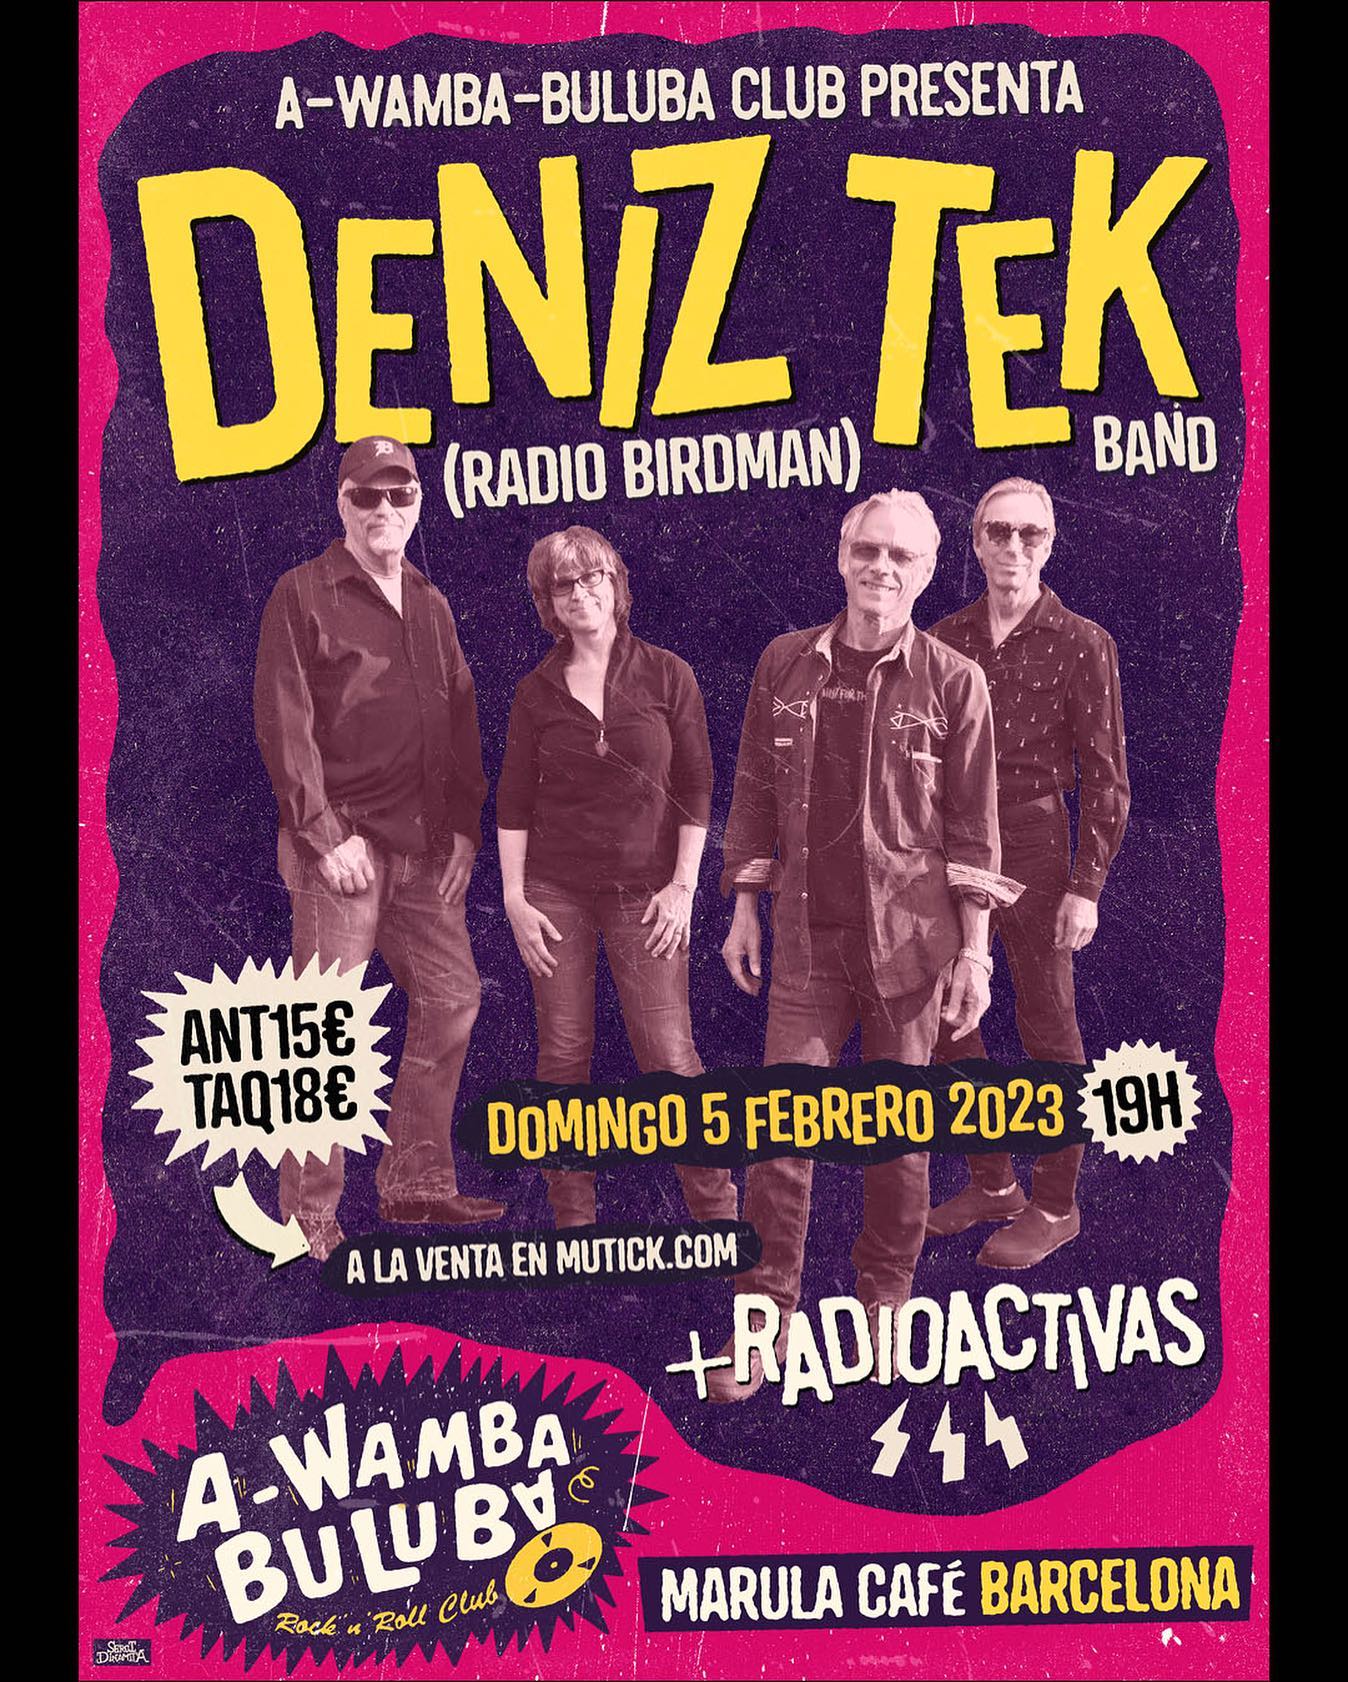 A Wamba Buluba Club pres. DENIZ TEK band (Radio Birdman) + Radioactivas